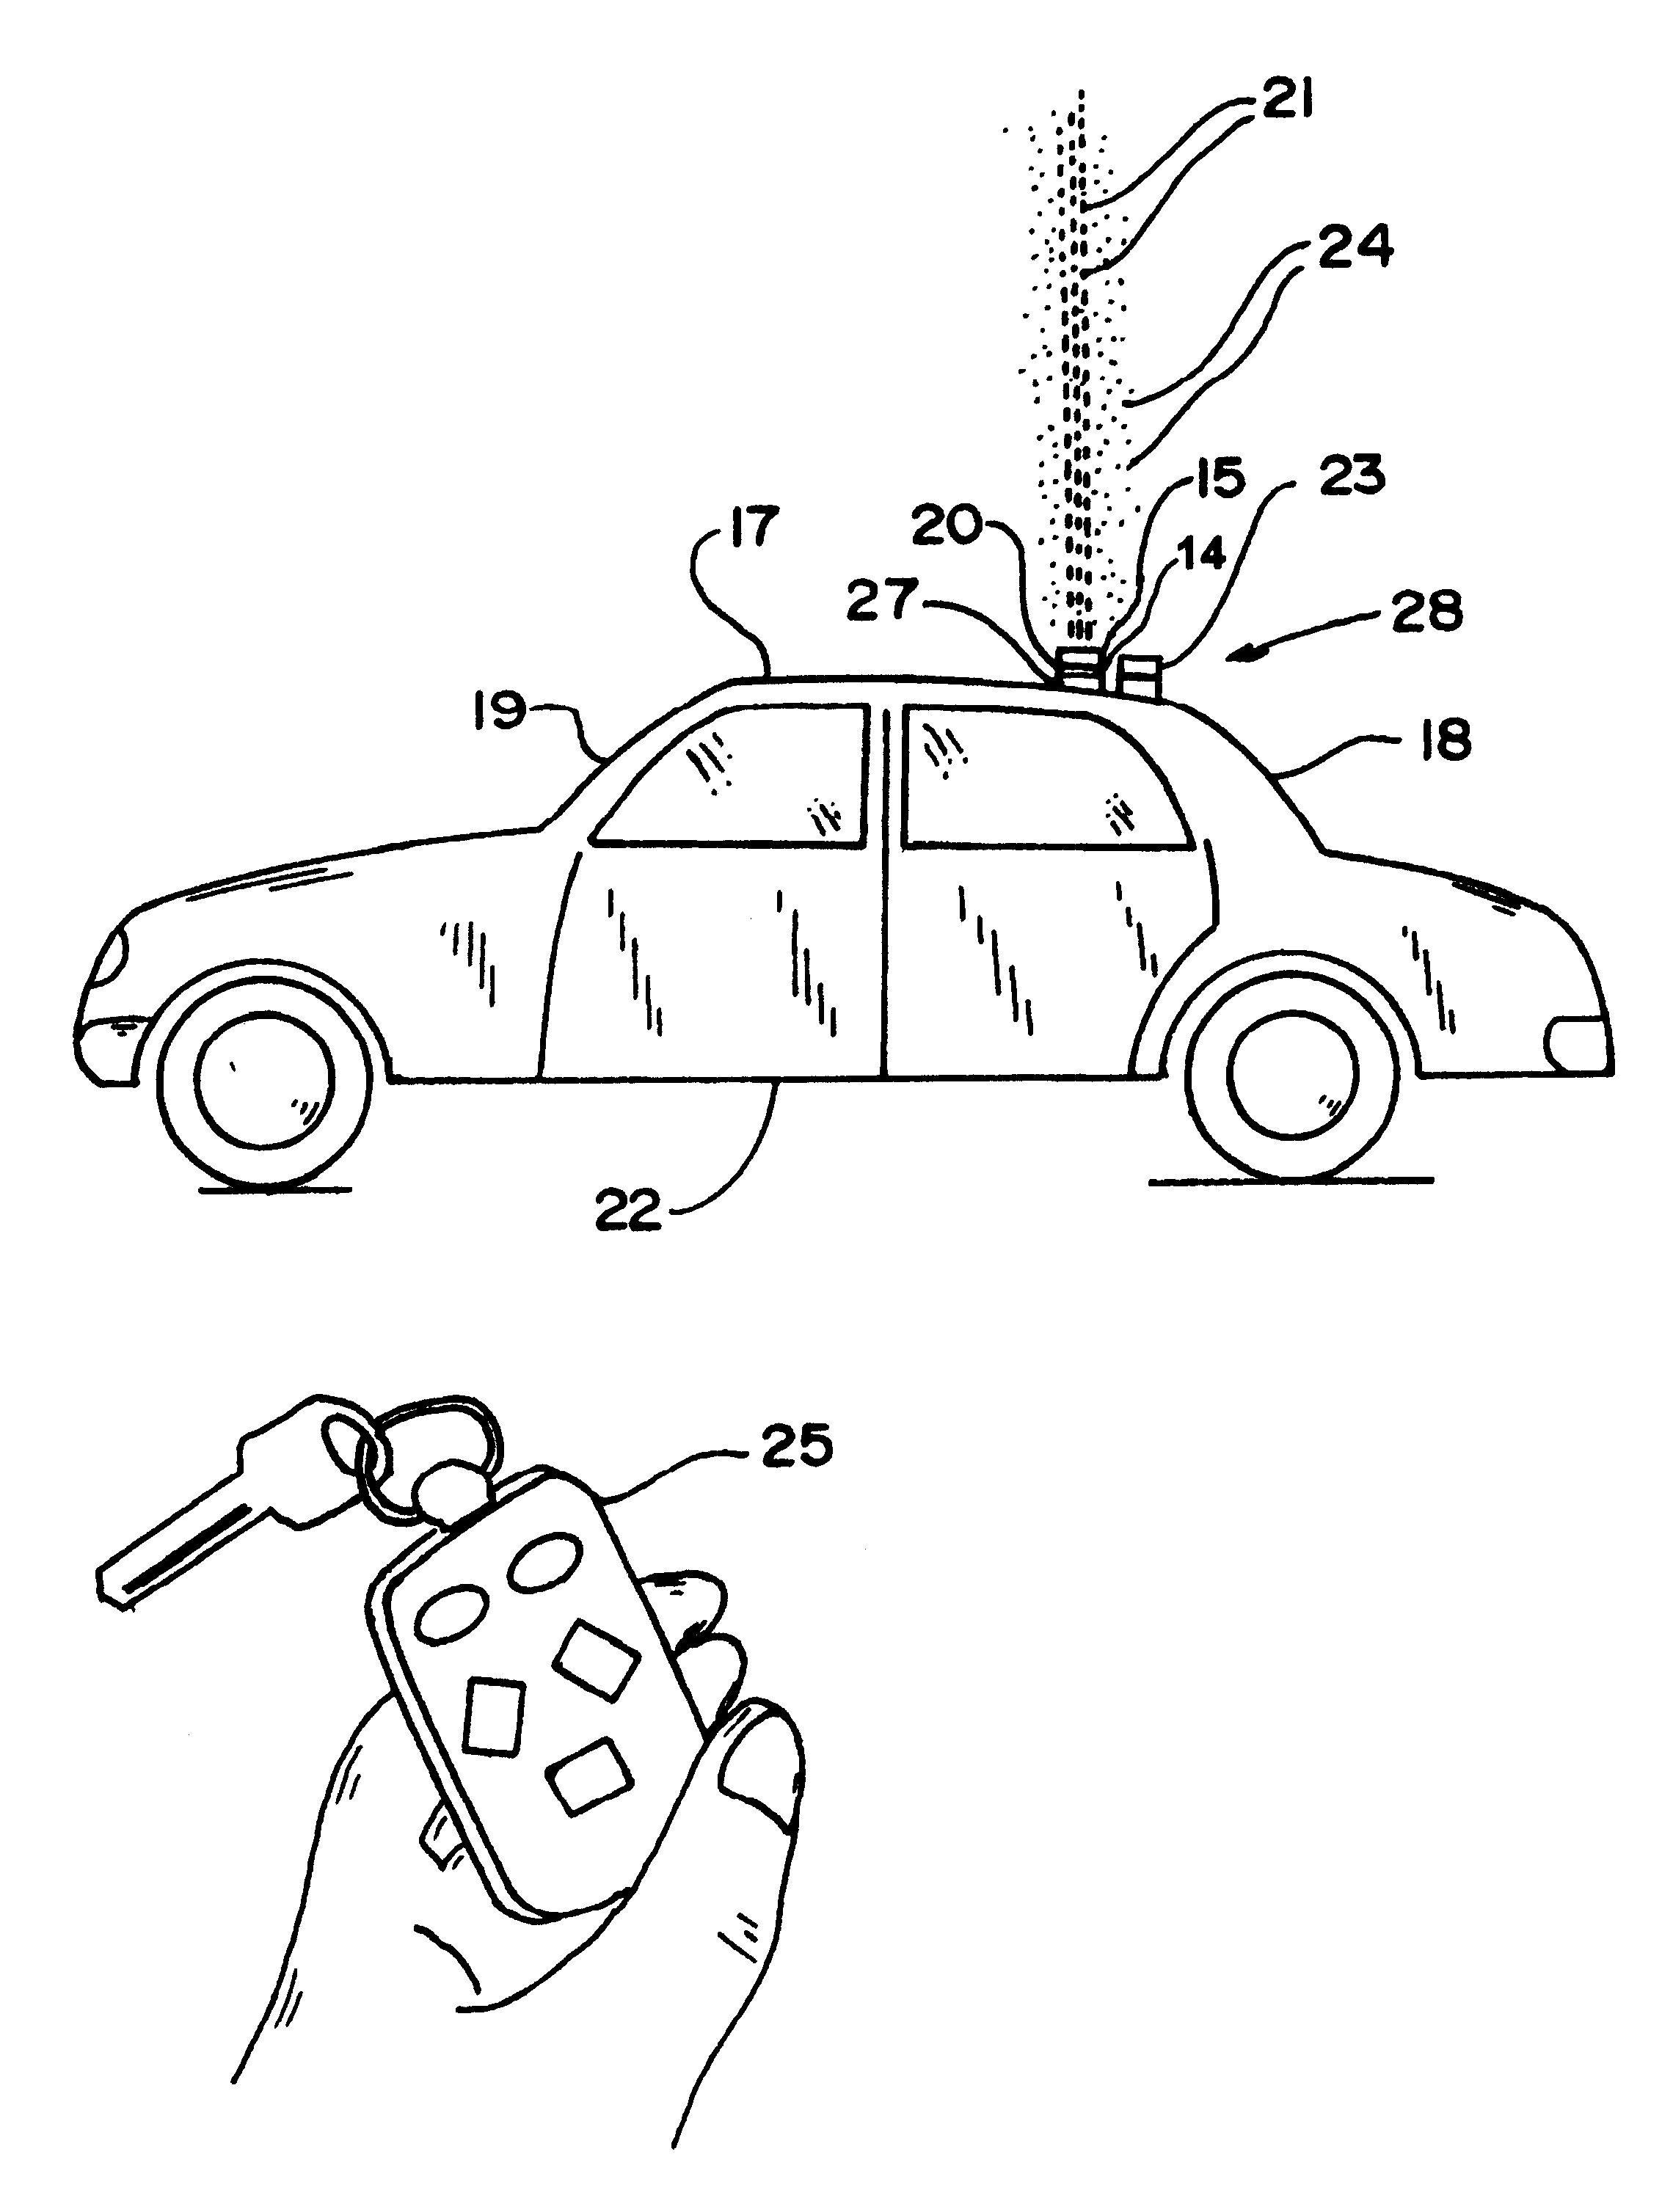 Vehicle locator device